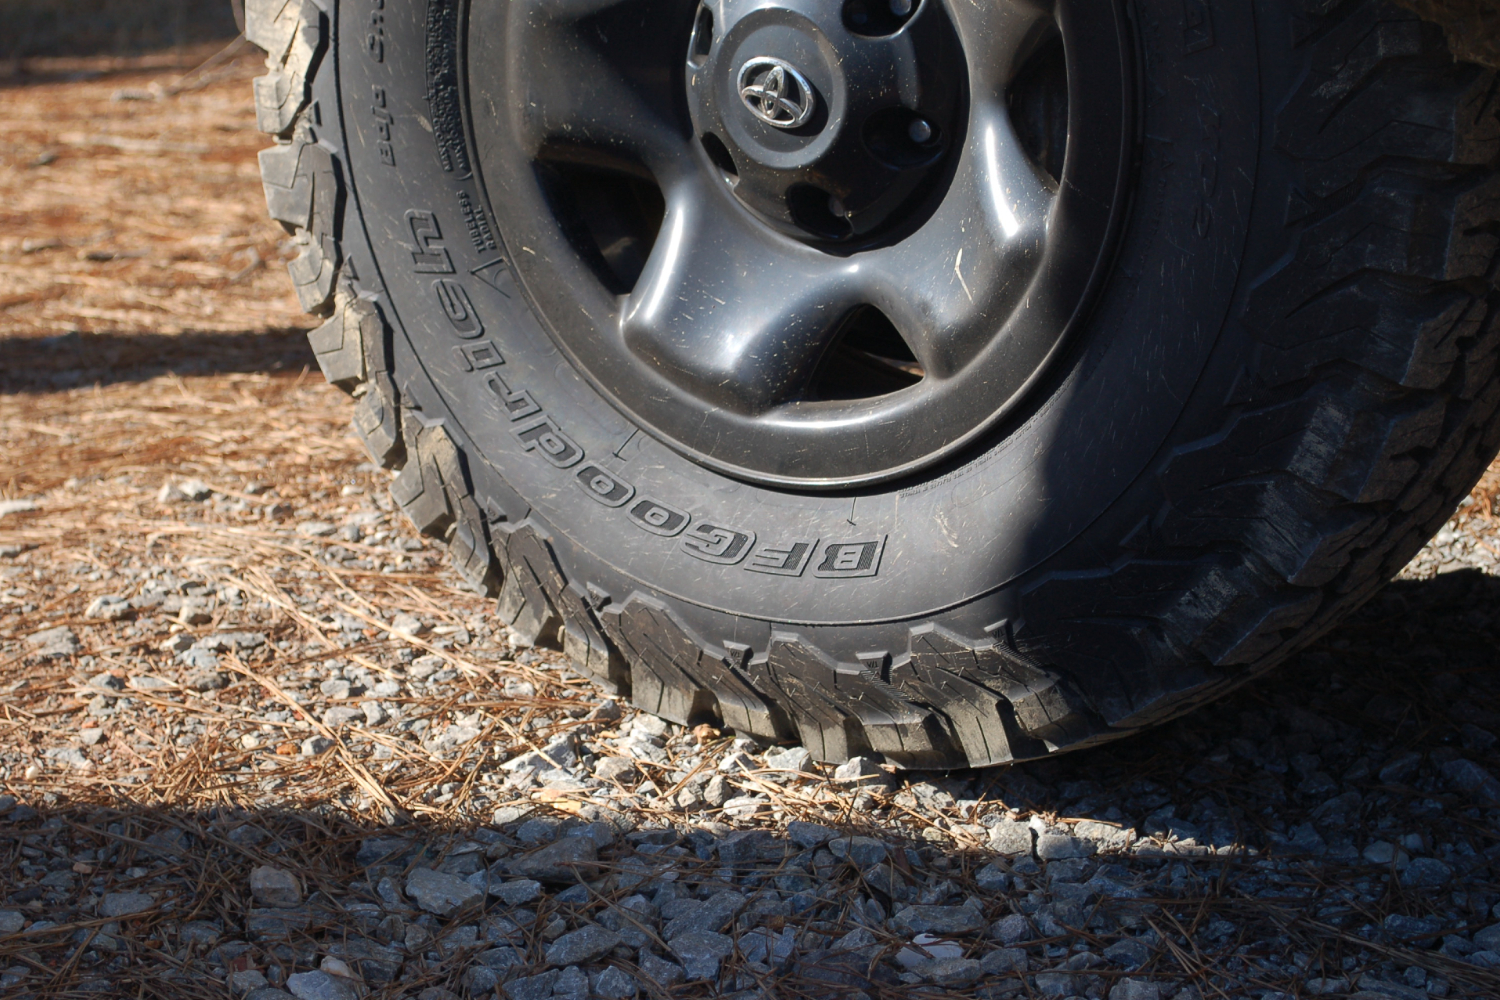 Best tire shine for bridgestone truck tires.